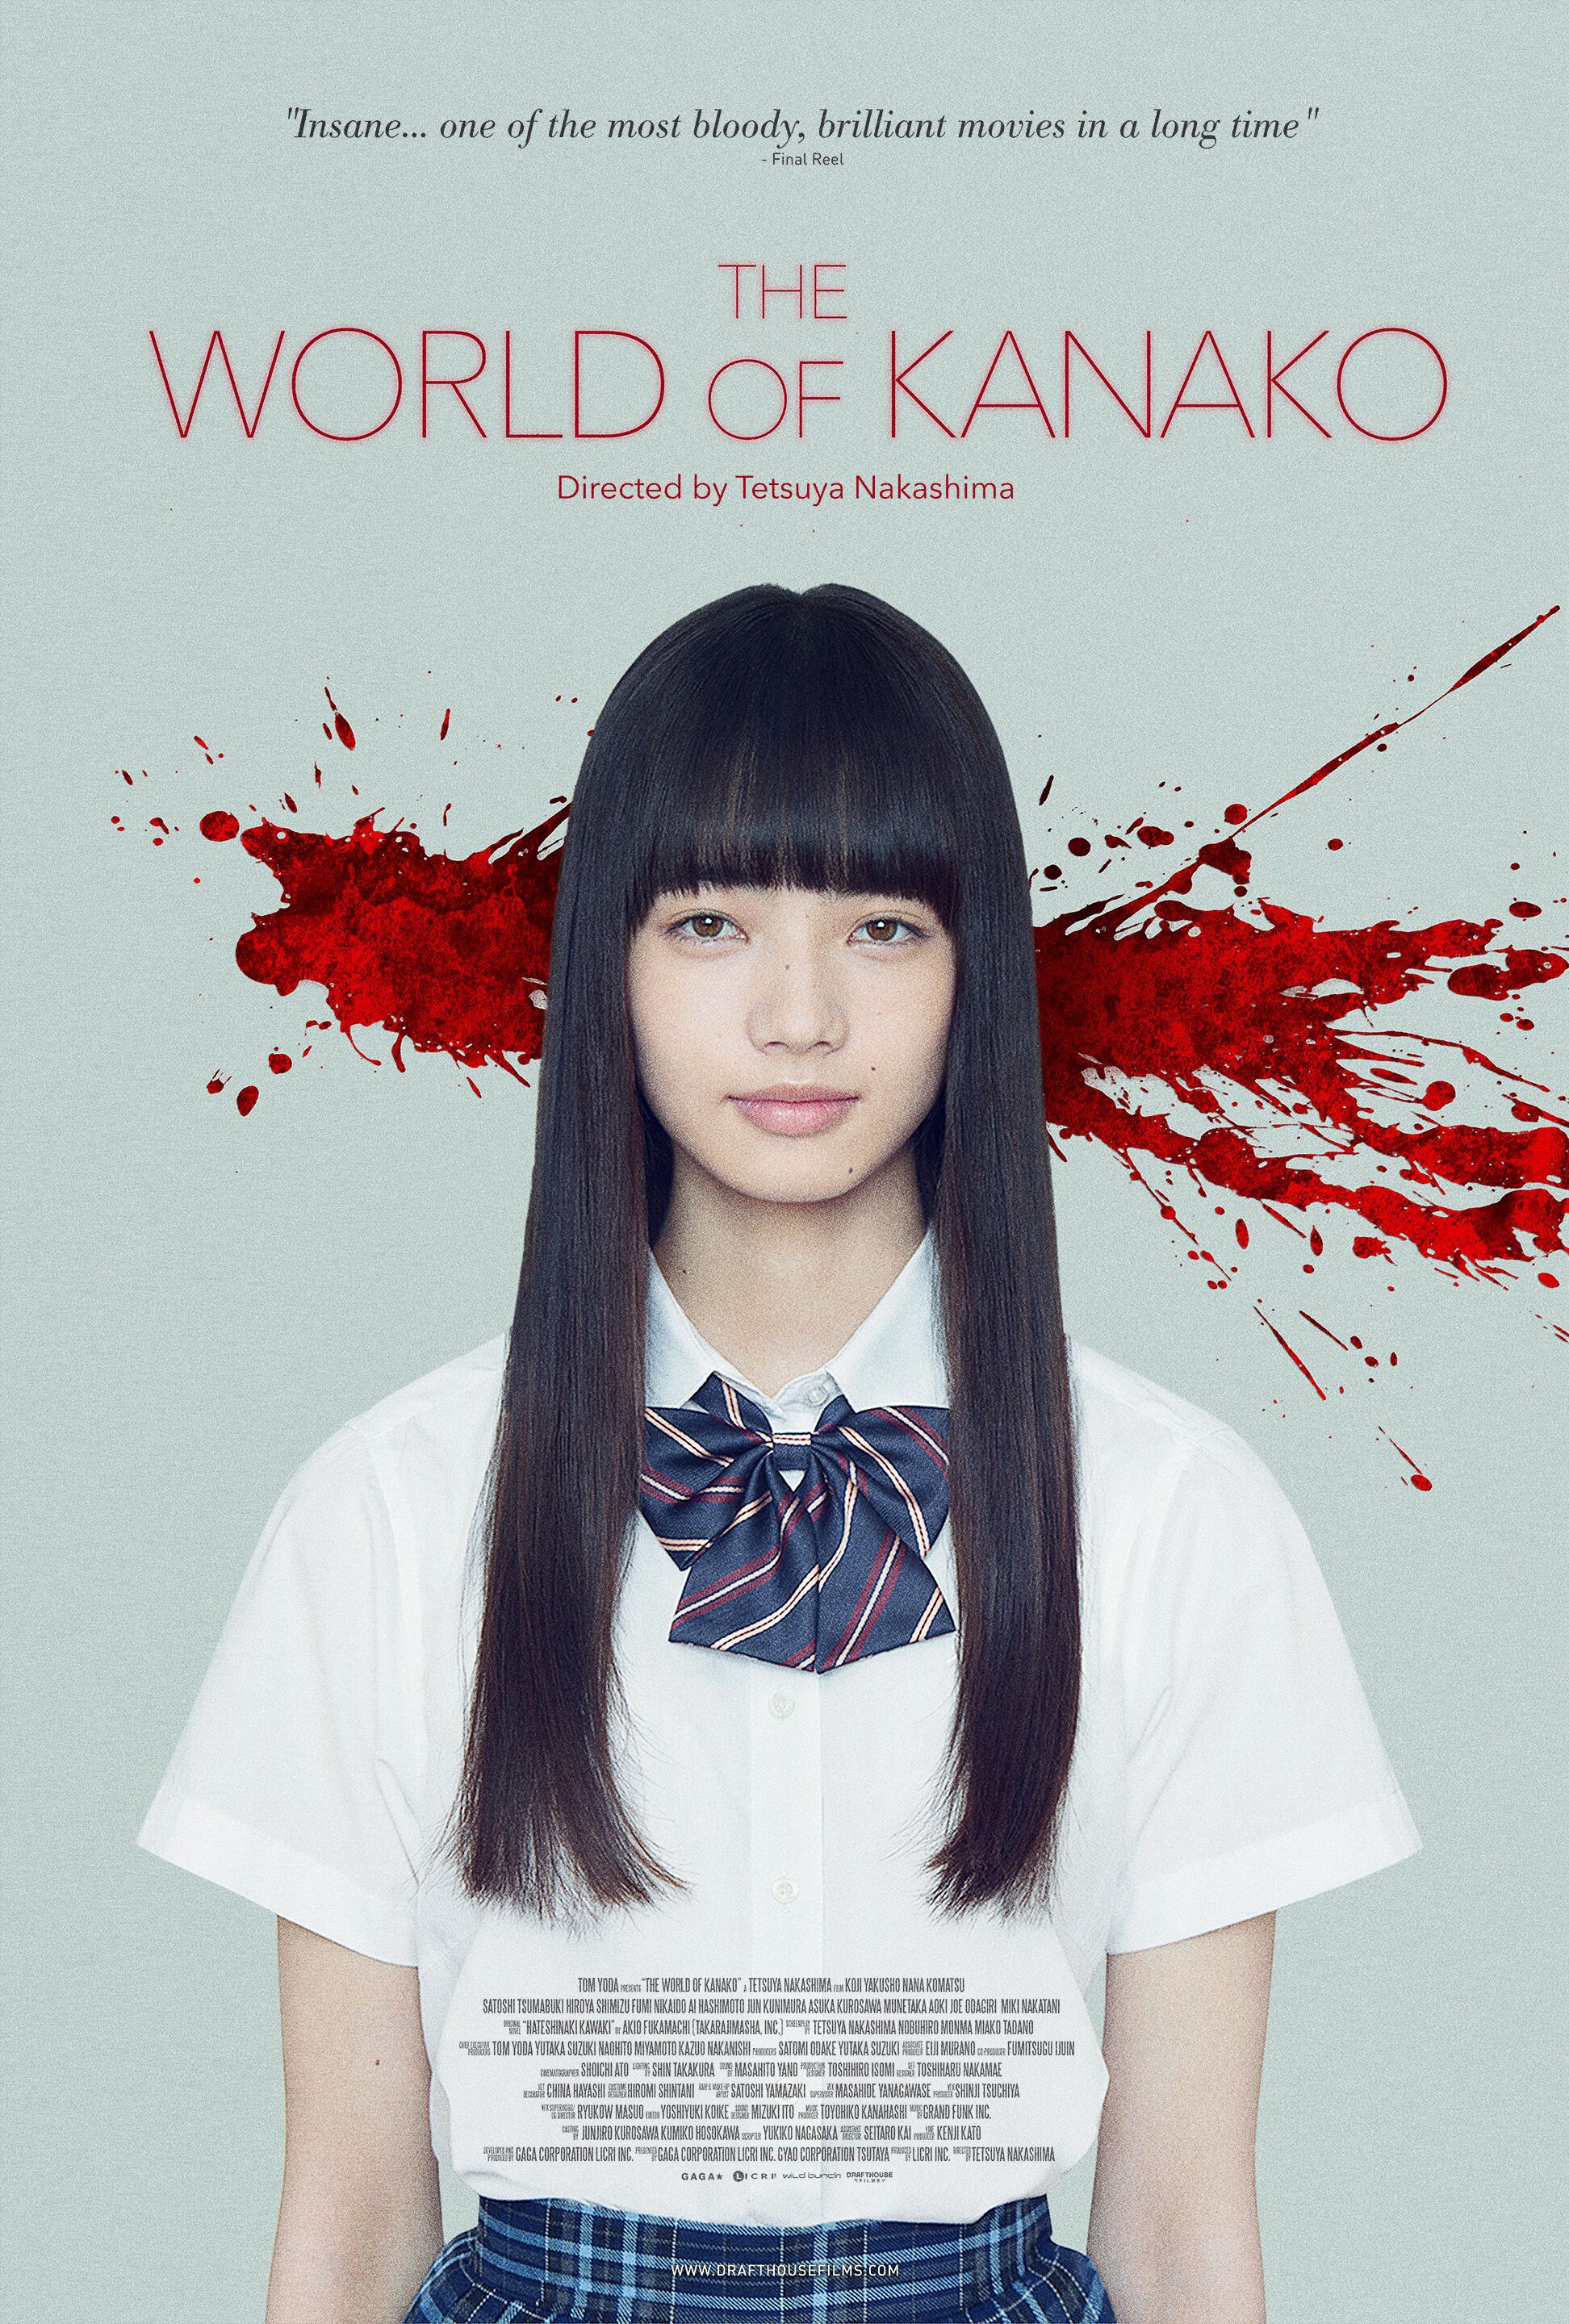 Mega Sized Movie Poster Image for Kawaki (#2 of 2)